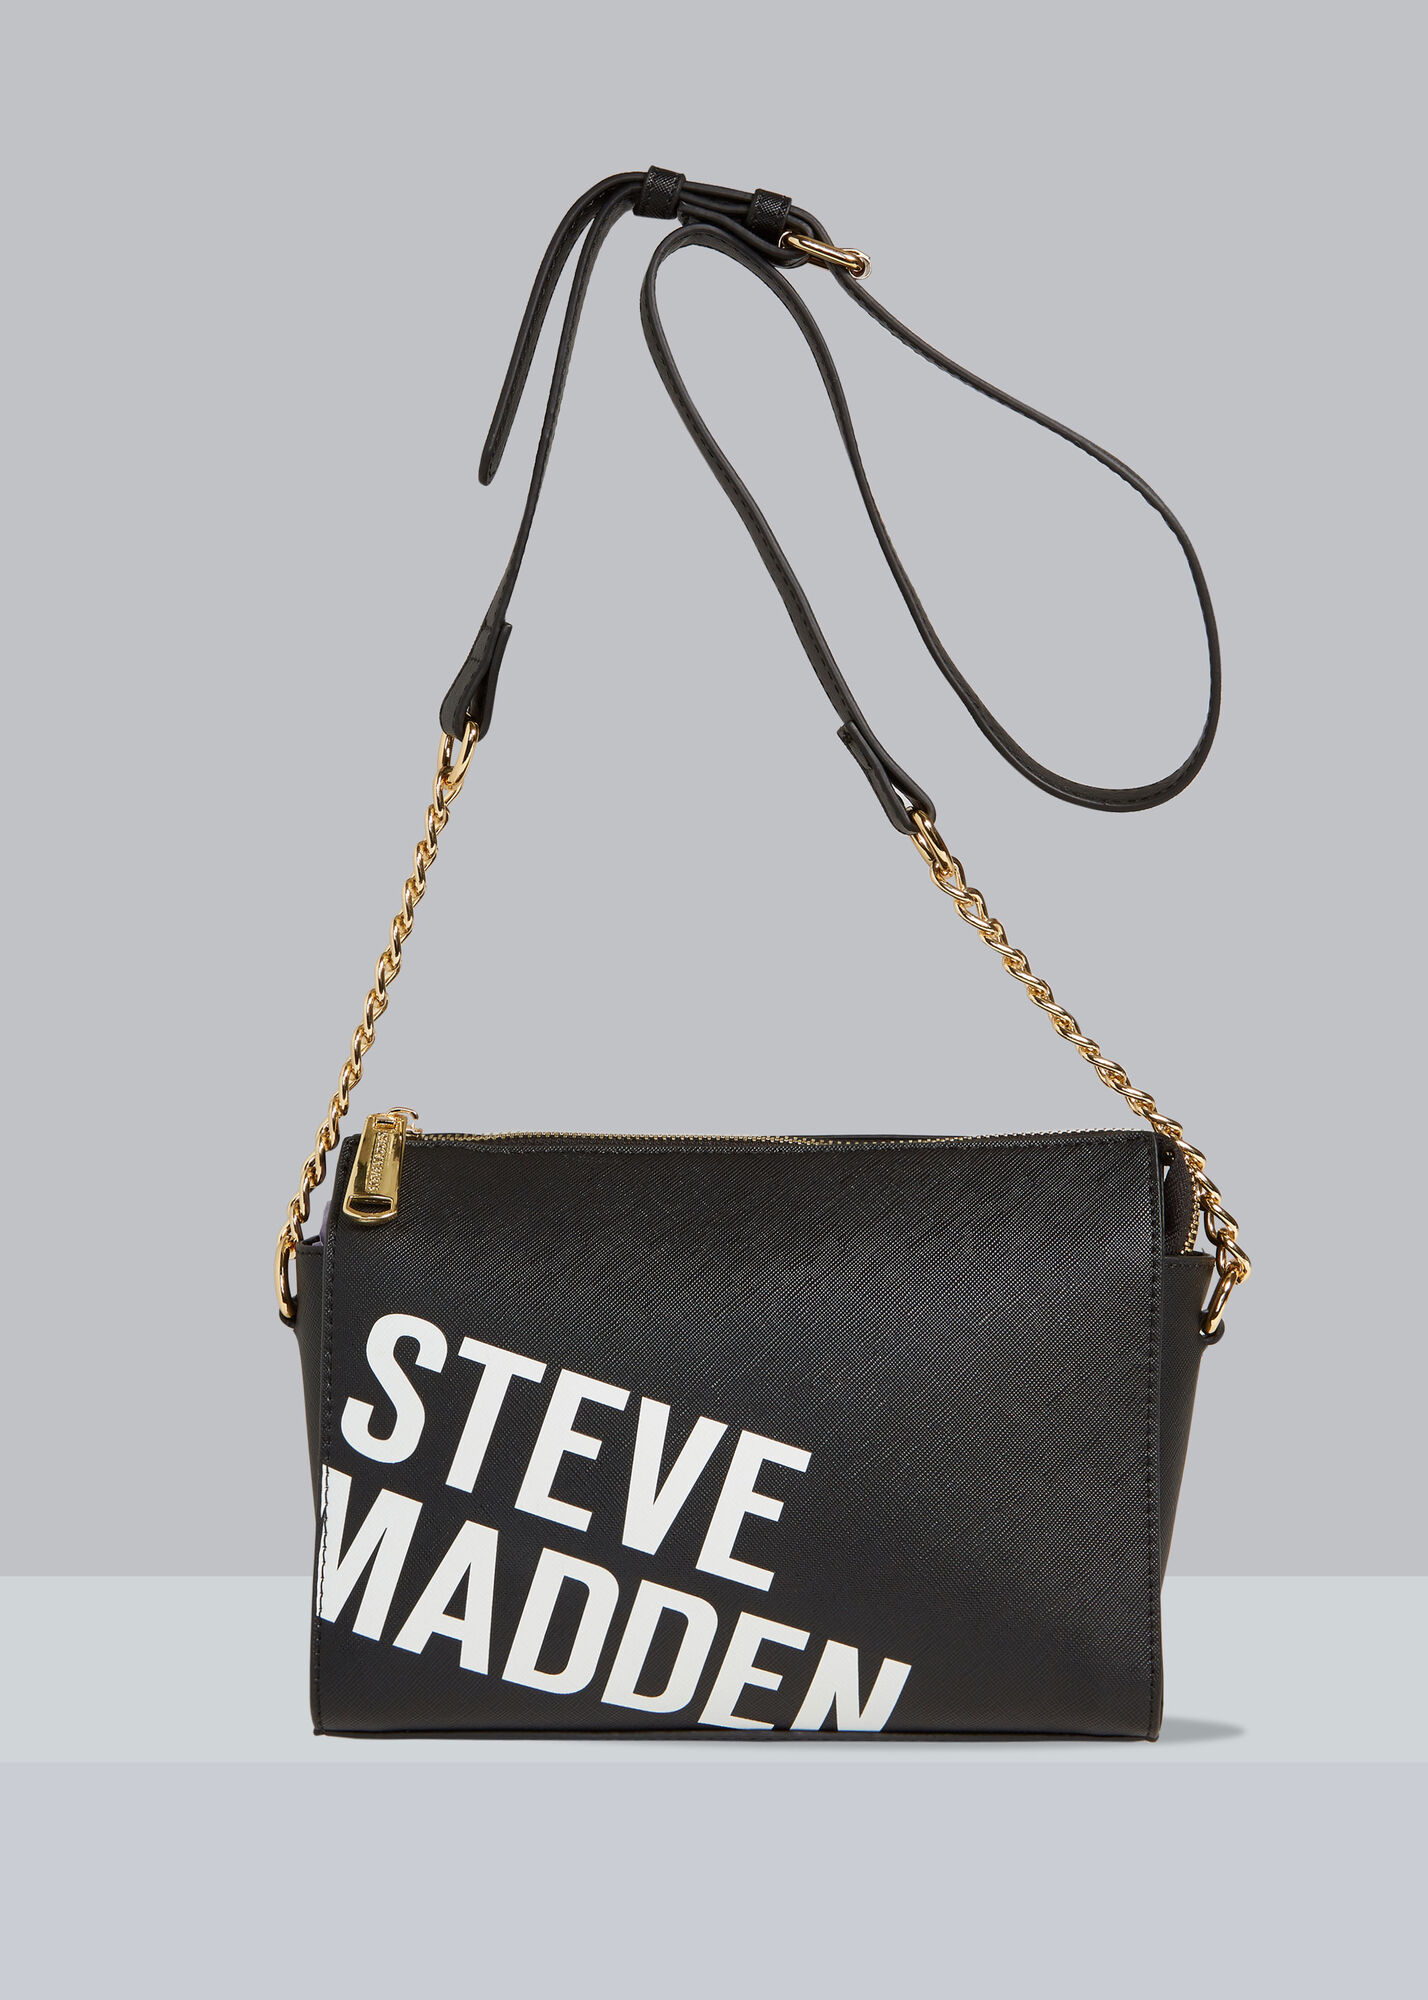 Steve Madden, Bags, Large Black Steve Madden Tote Bag W Gold Chains